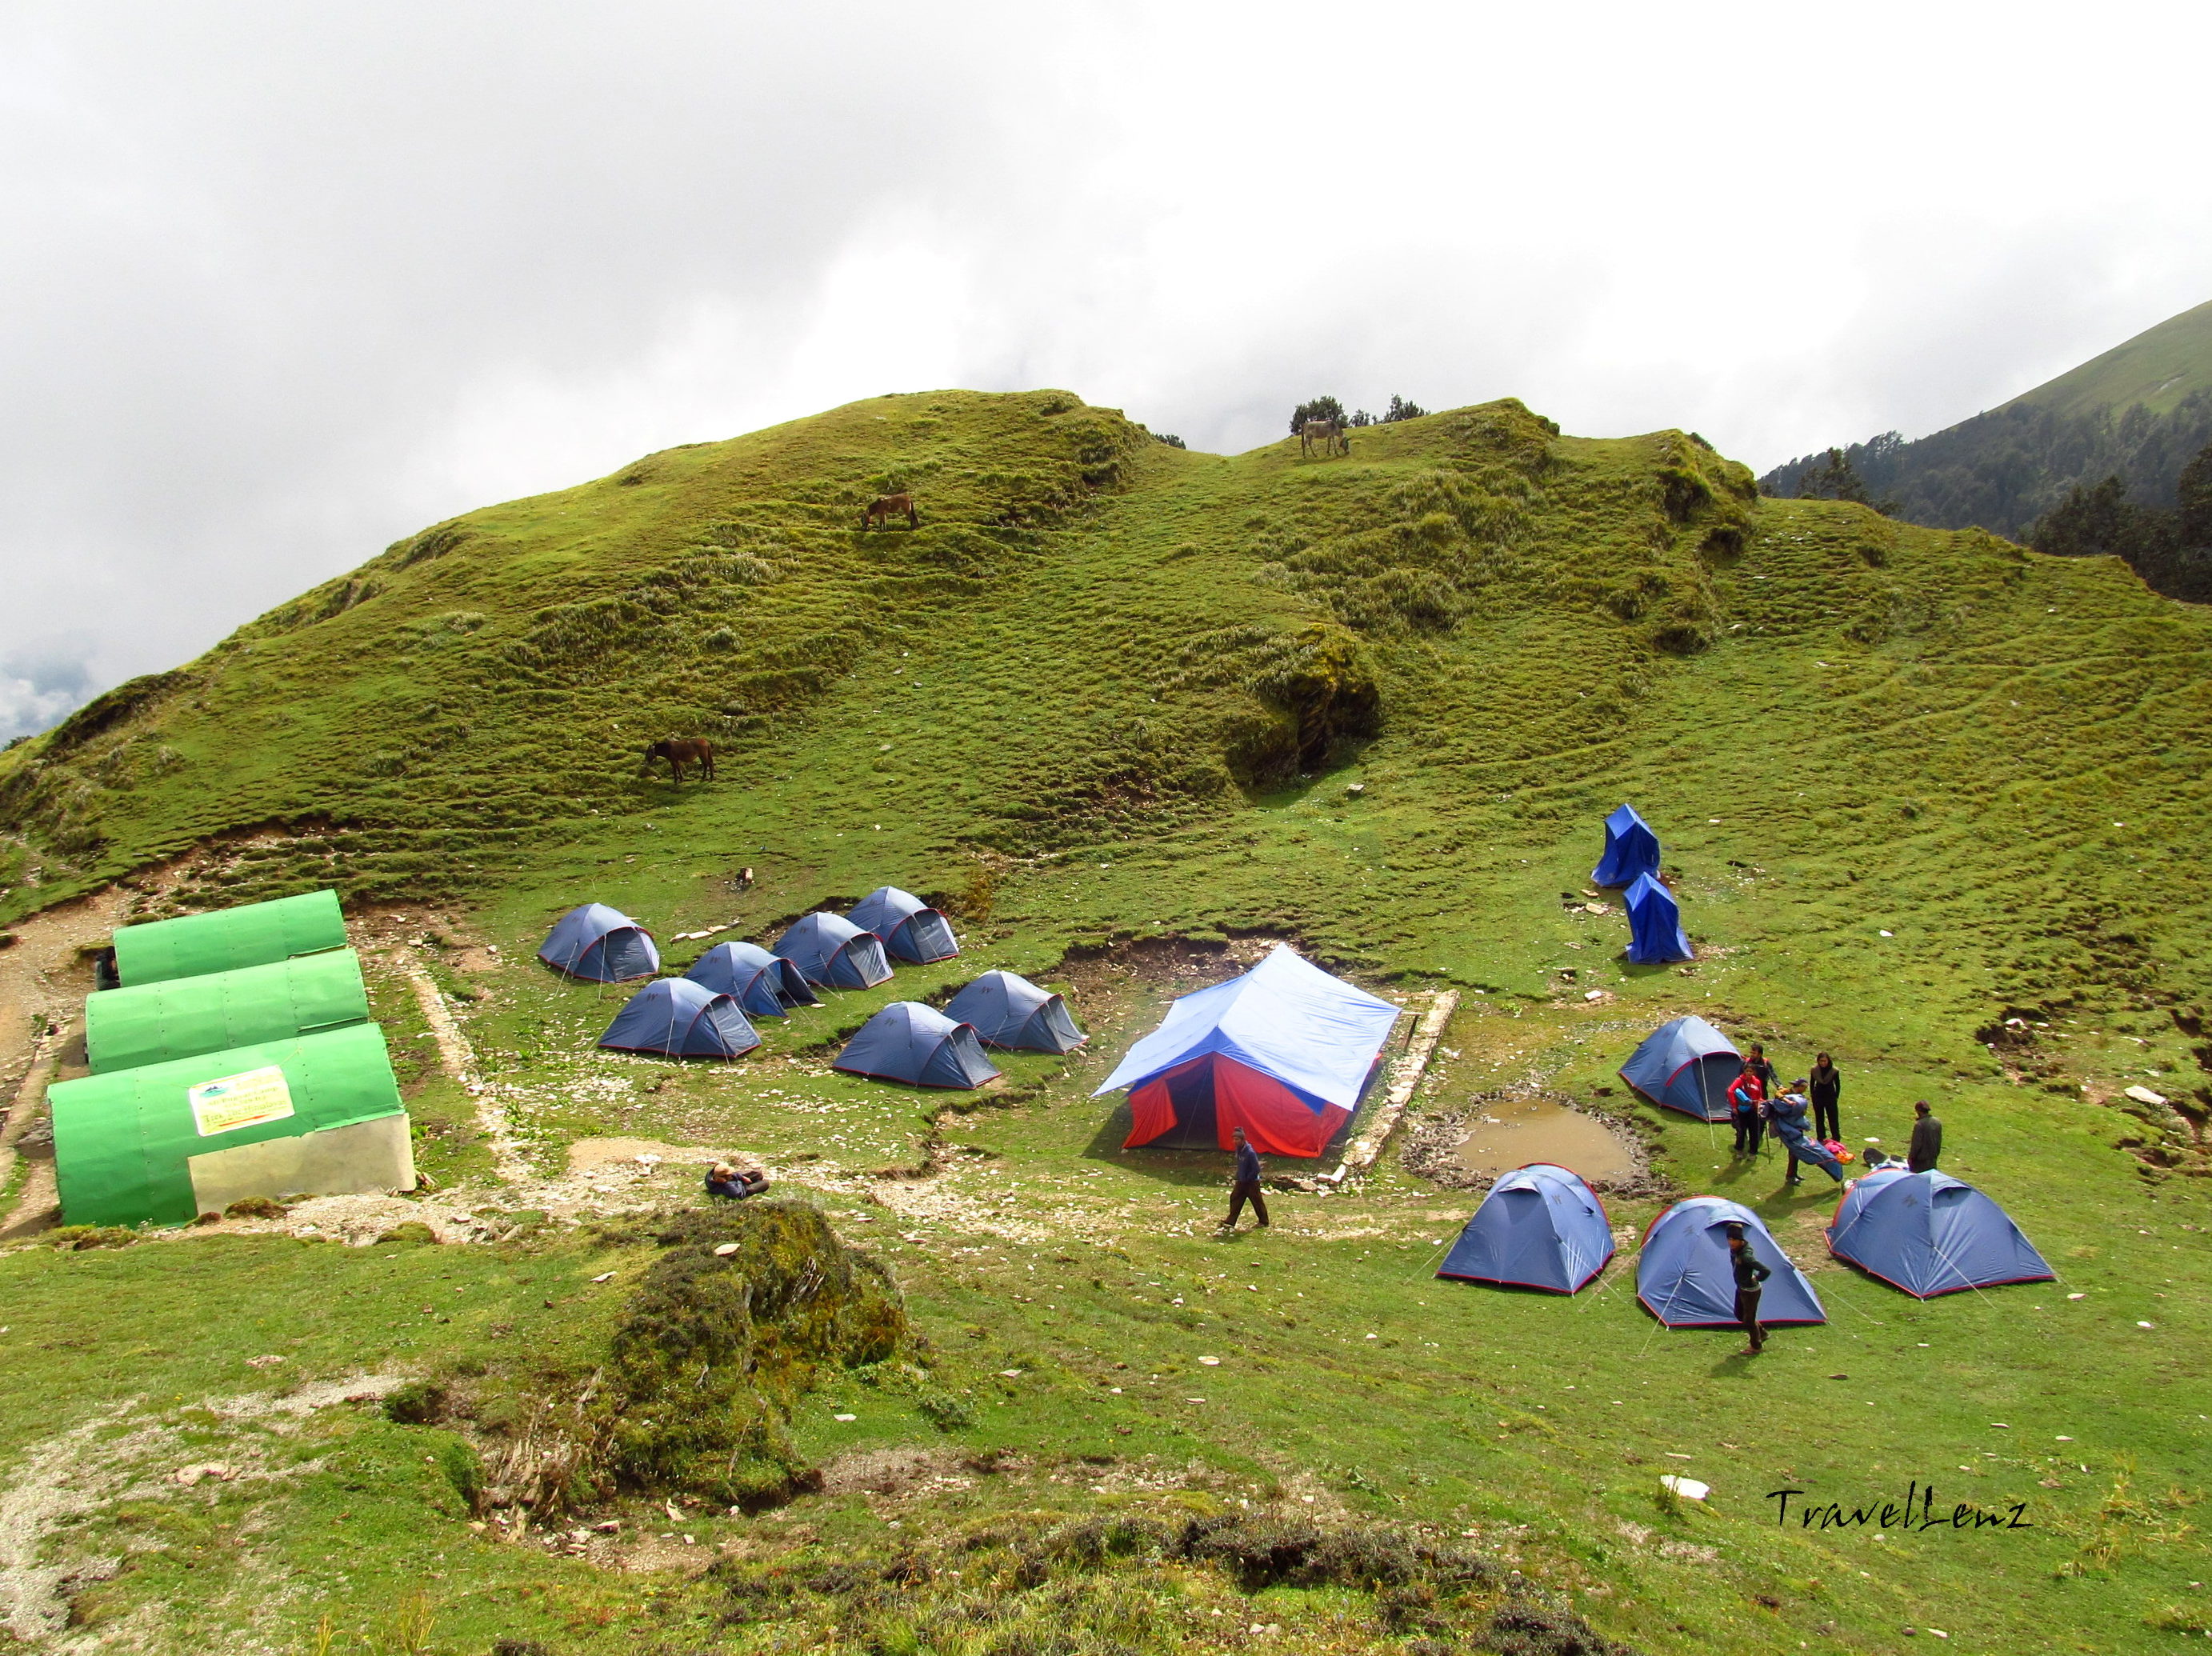 A campsite on a grassland comprising of a dozen of blue tents, three fibreglass tents and a mess tent.